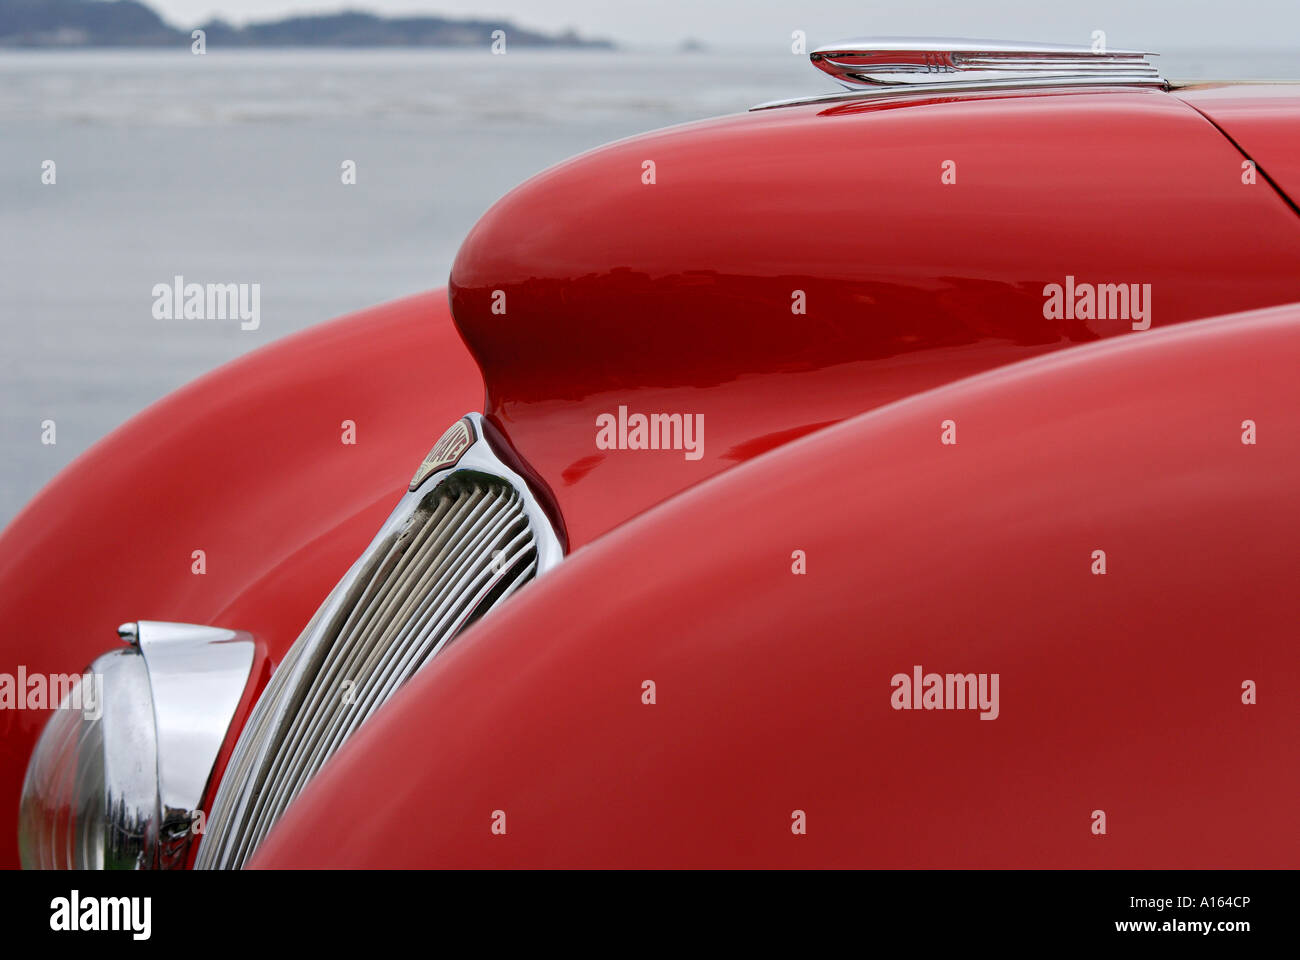 "Delahaye ^135 M ^Figoni and Falaschi cabriolet ^1947 hood" Stock Photo